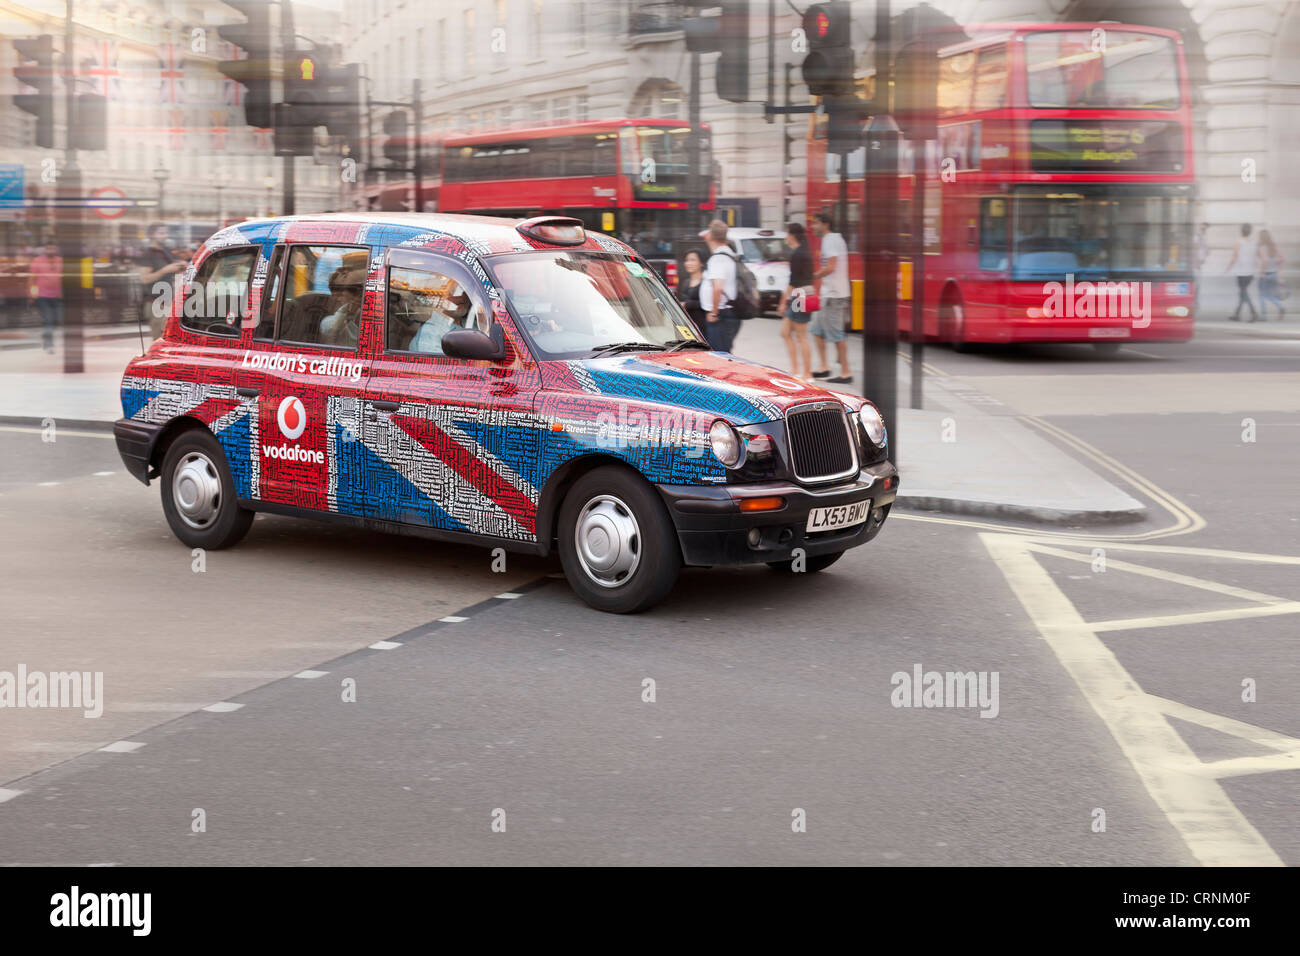 Vodafone 'London's calling' wrap advertising on London taxi, England Stock Photo